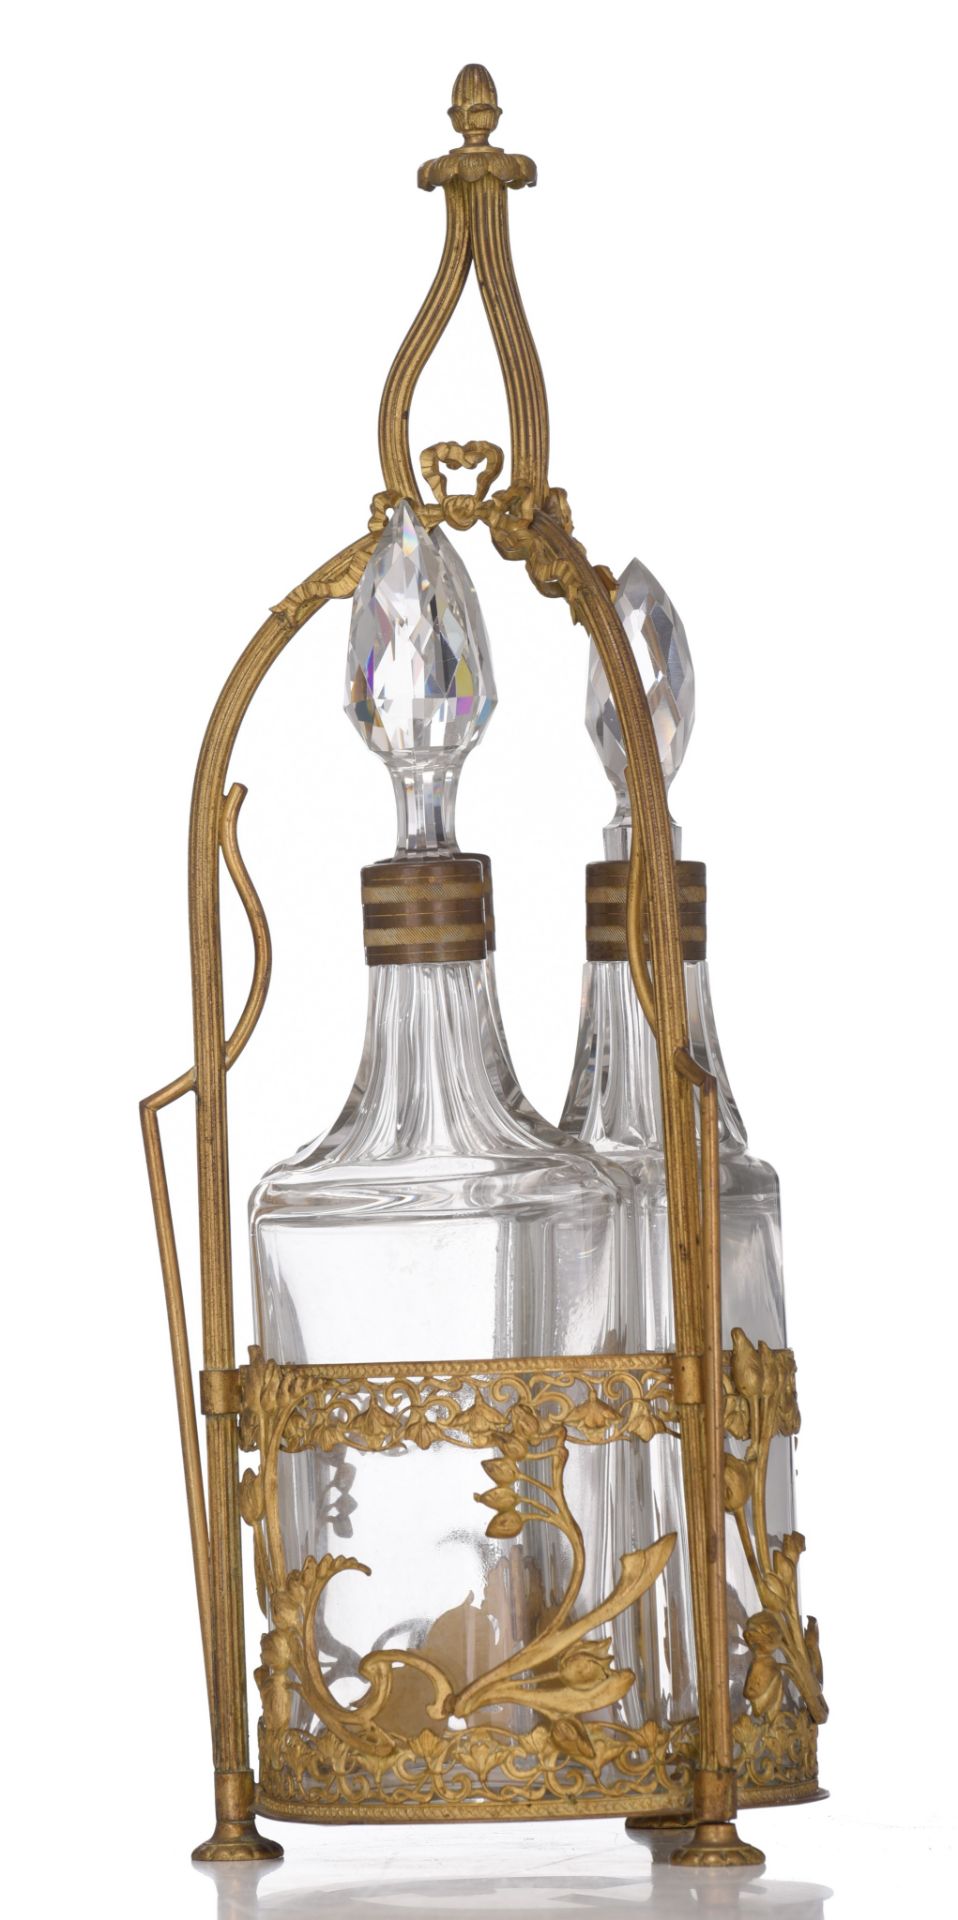 A fine Art Nouveau gilt brass cruet set with three cut glass carafes, H 43,5 cm - Image 4 of 5